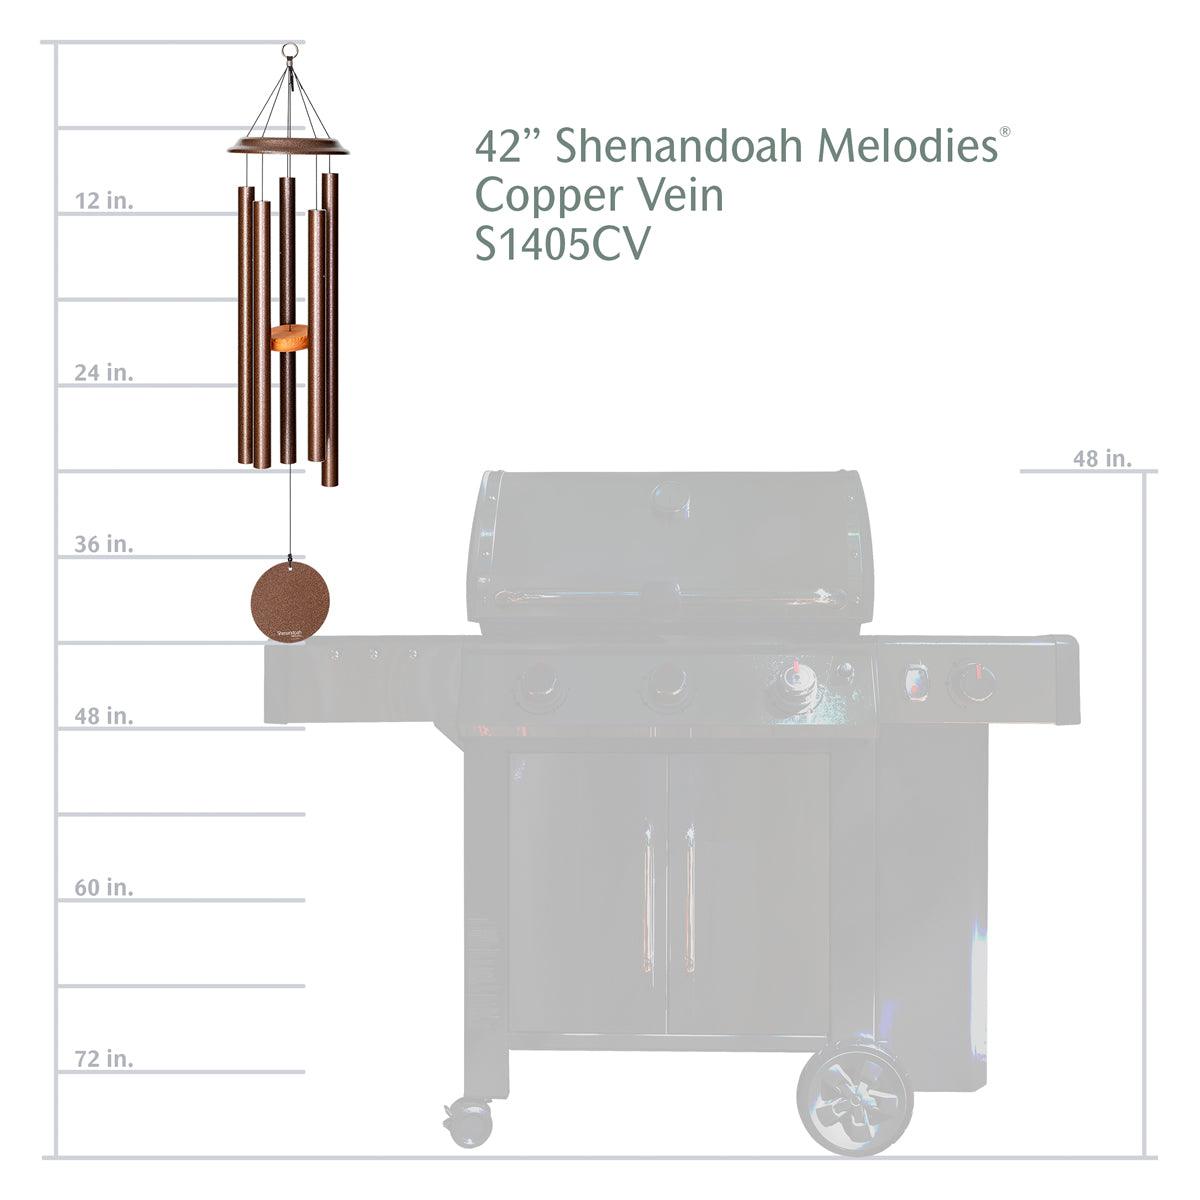 Shenandoah Melodies 42-inch Wind Chime - Copper Vein